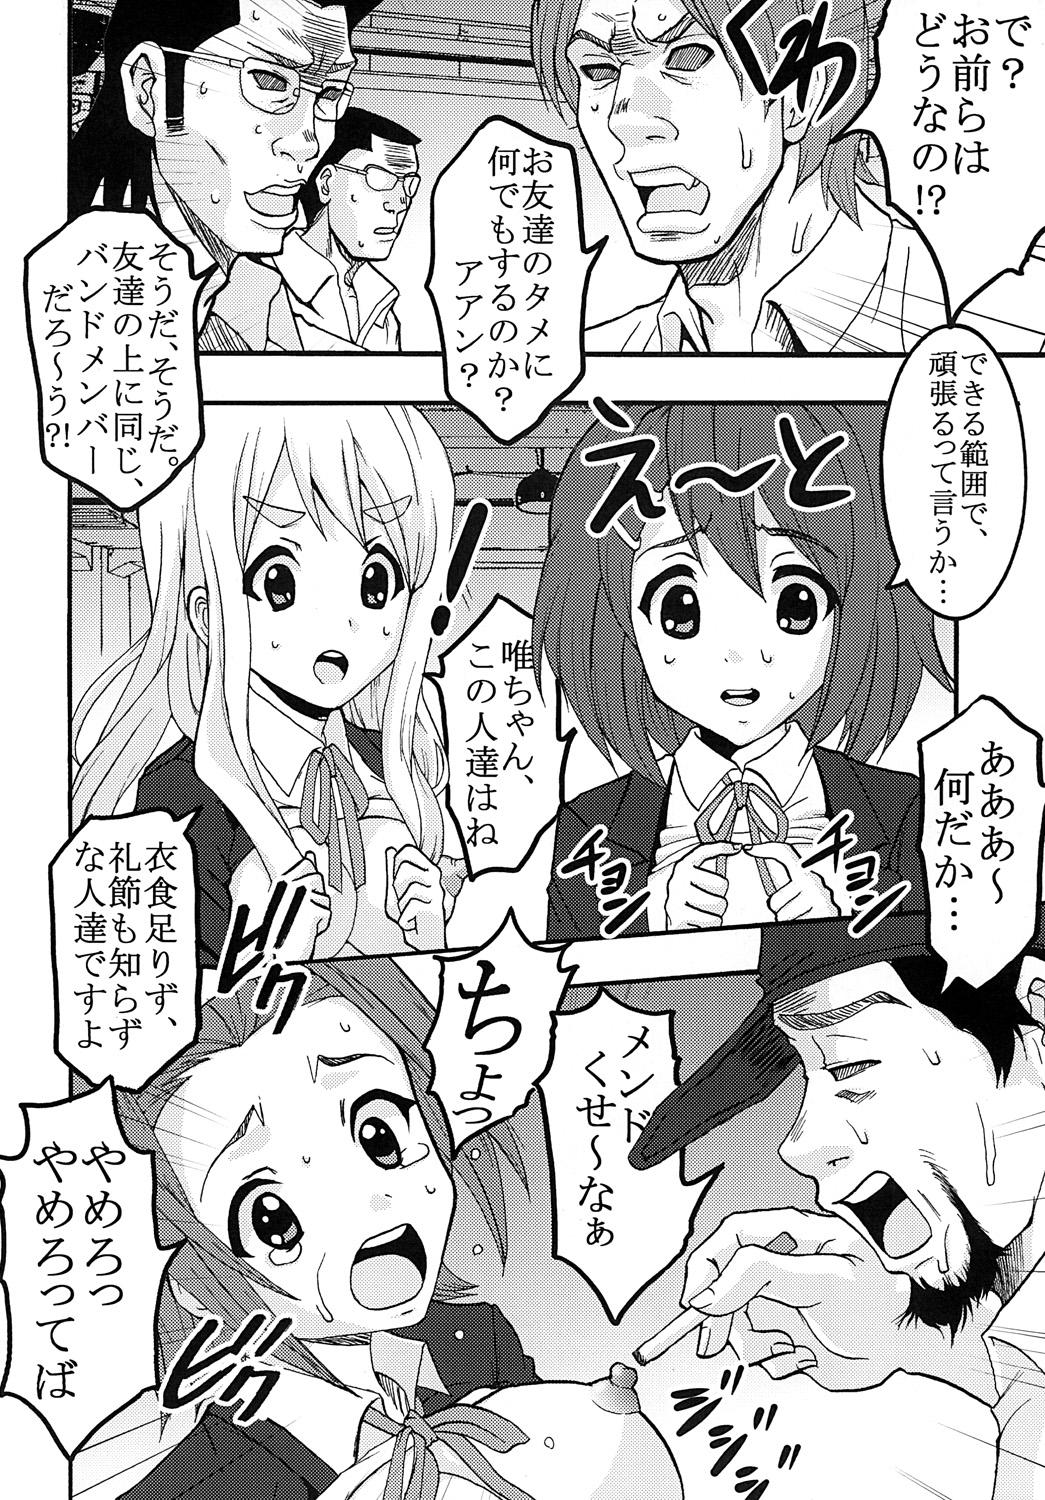 Family Baku-ON! 2 - K on Nurugel - Page 5